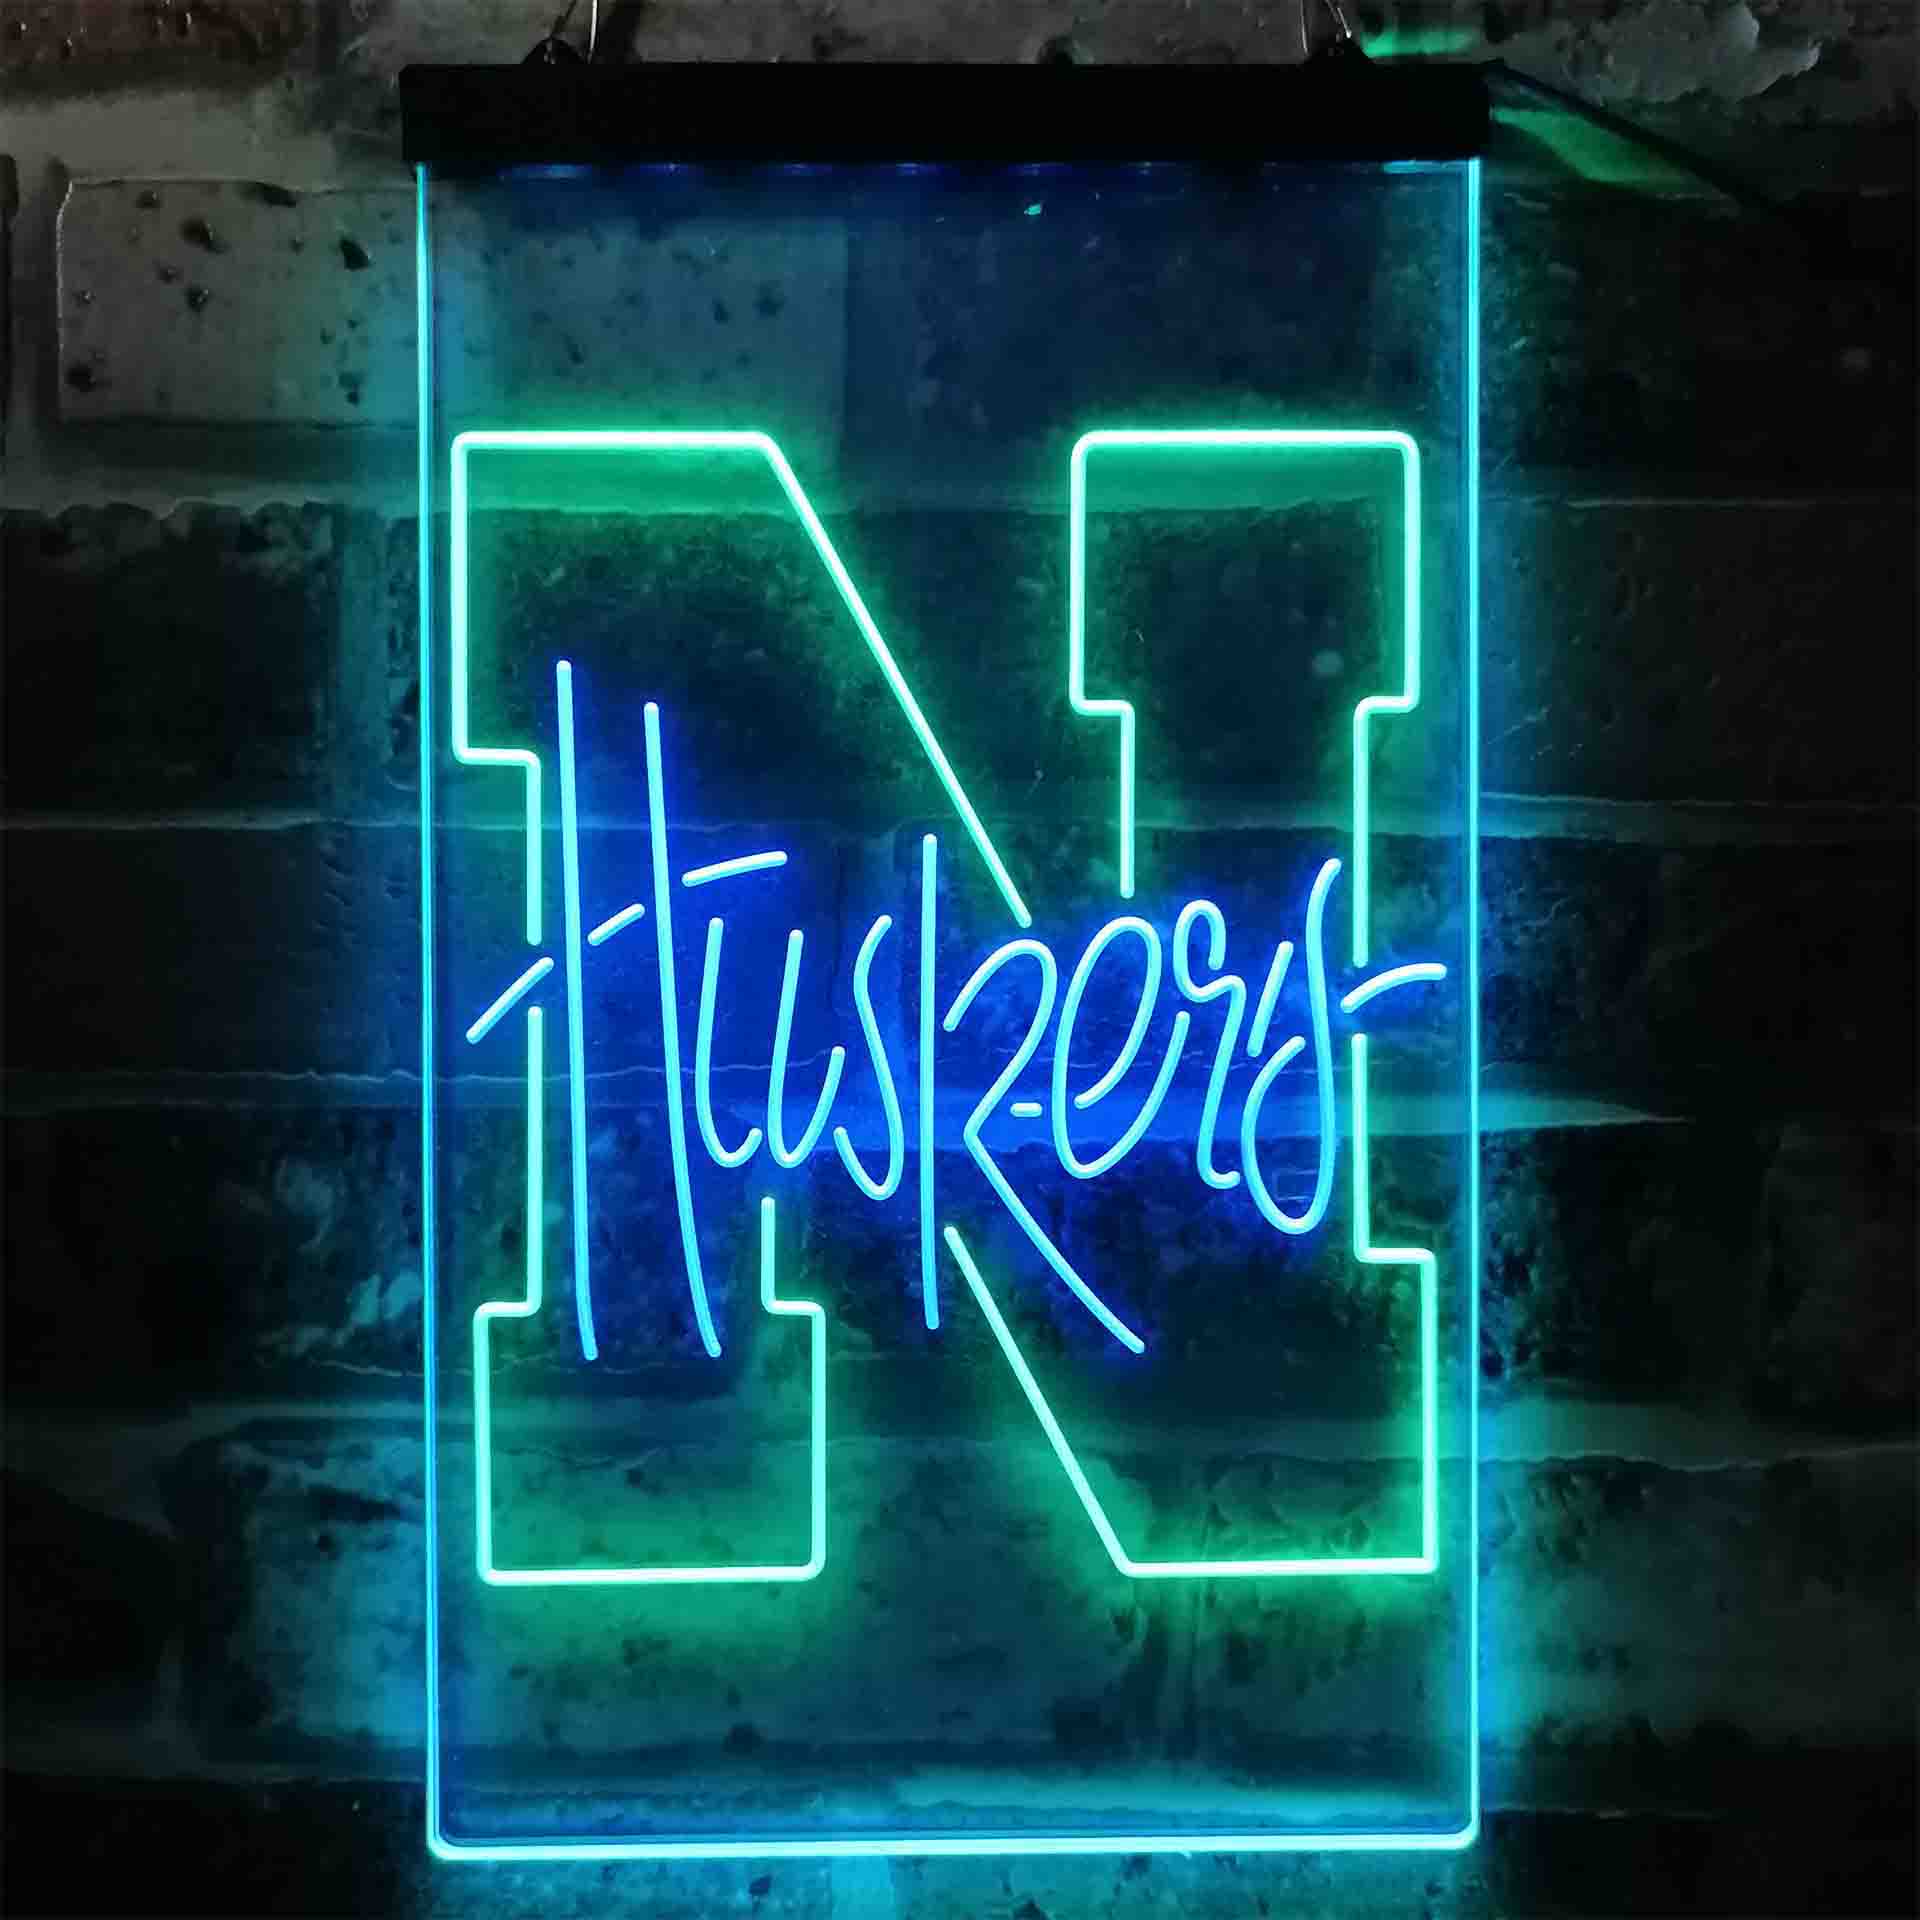 Nebraskas Football Team Sport Club Cornhuskers Group LED Neon Sign